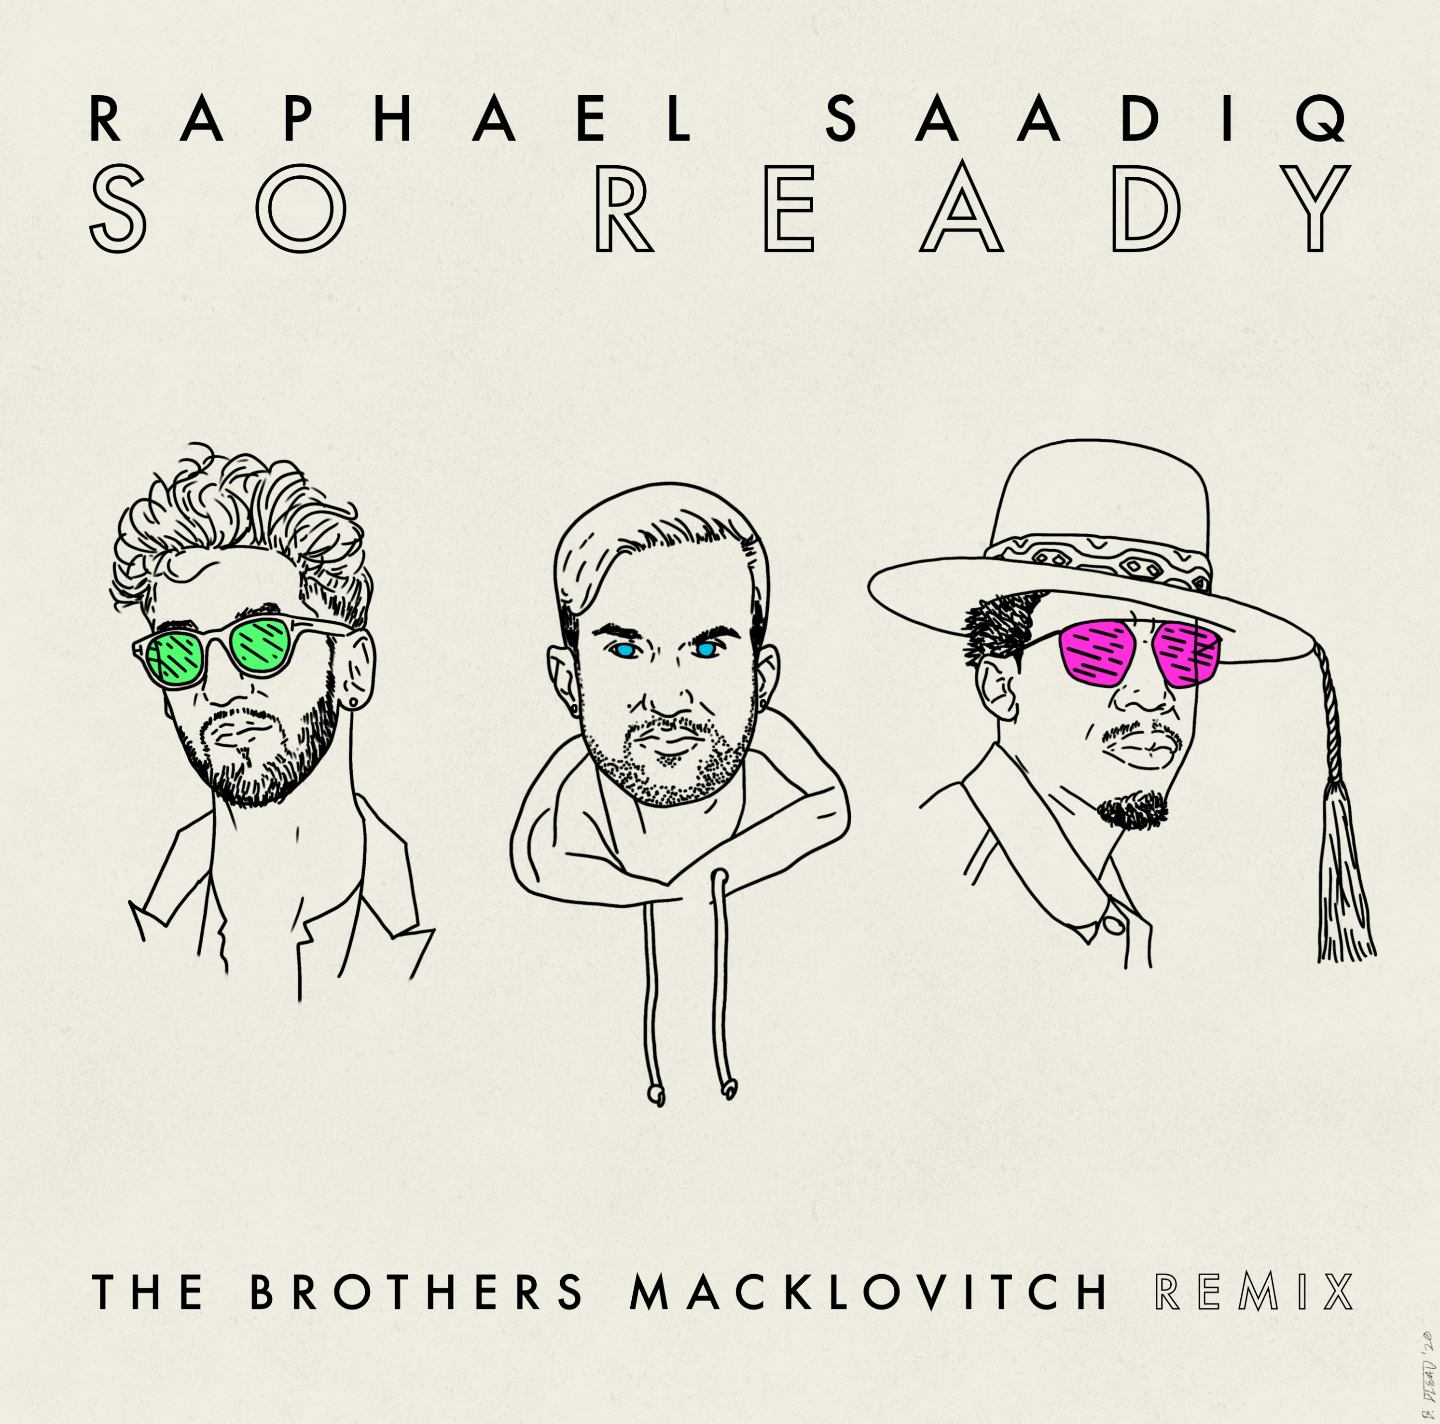 Raphael Saadiq Releases “So Ready” The Brothers Macklovitch Remix